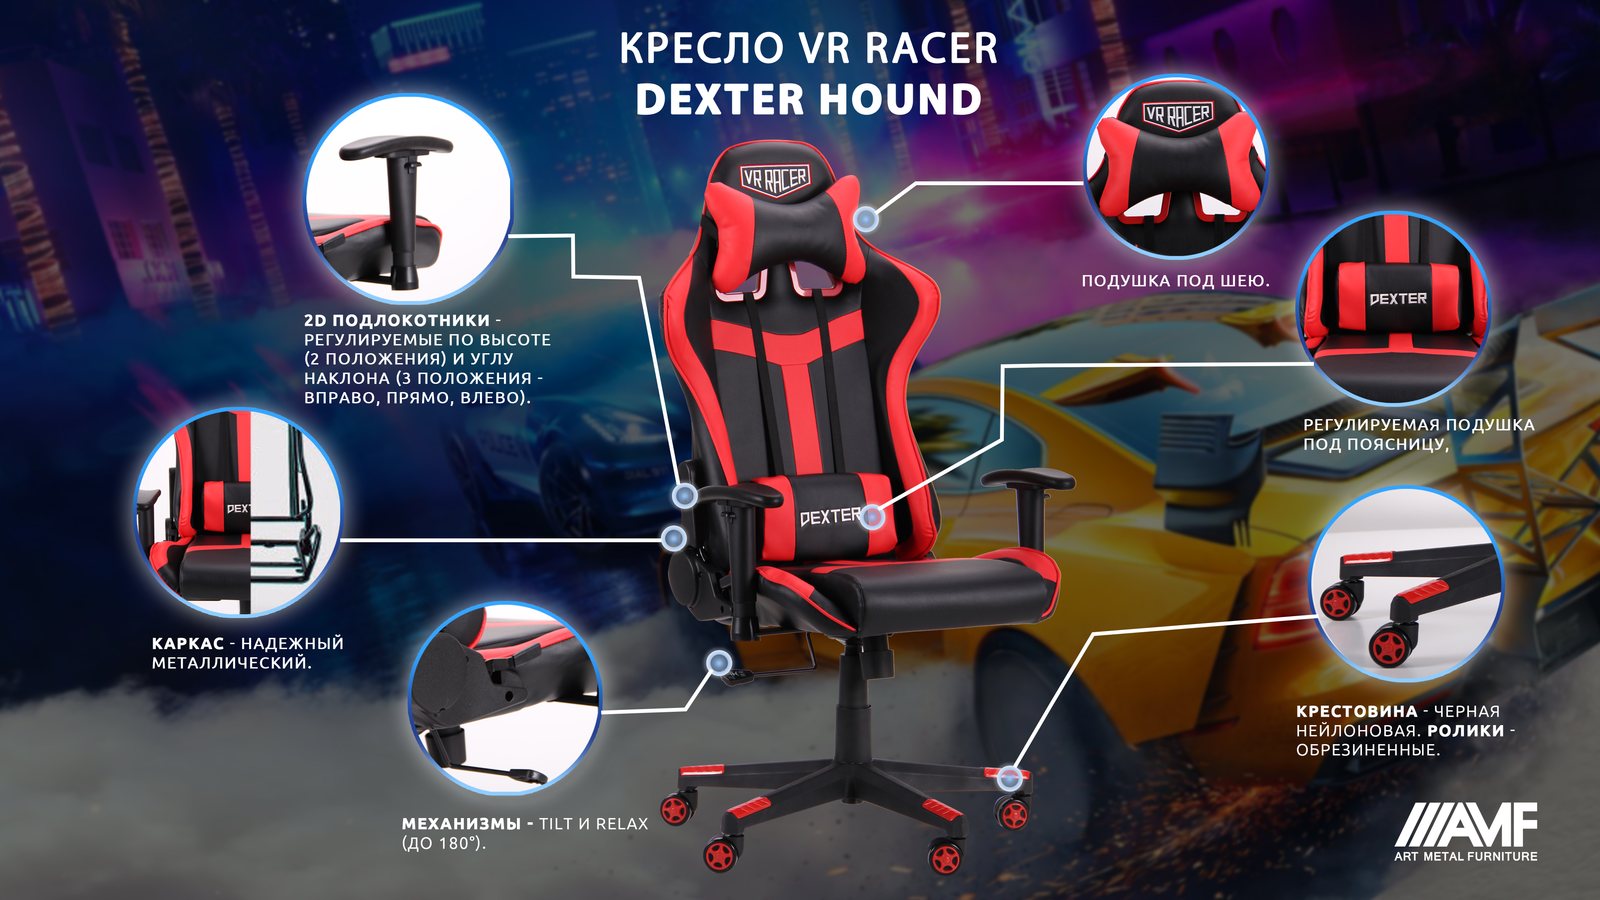 Кресло VR Racer Dexter Hound описание